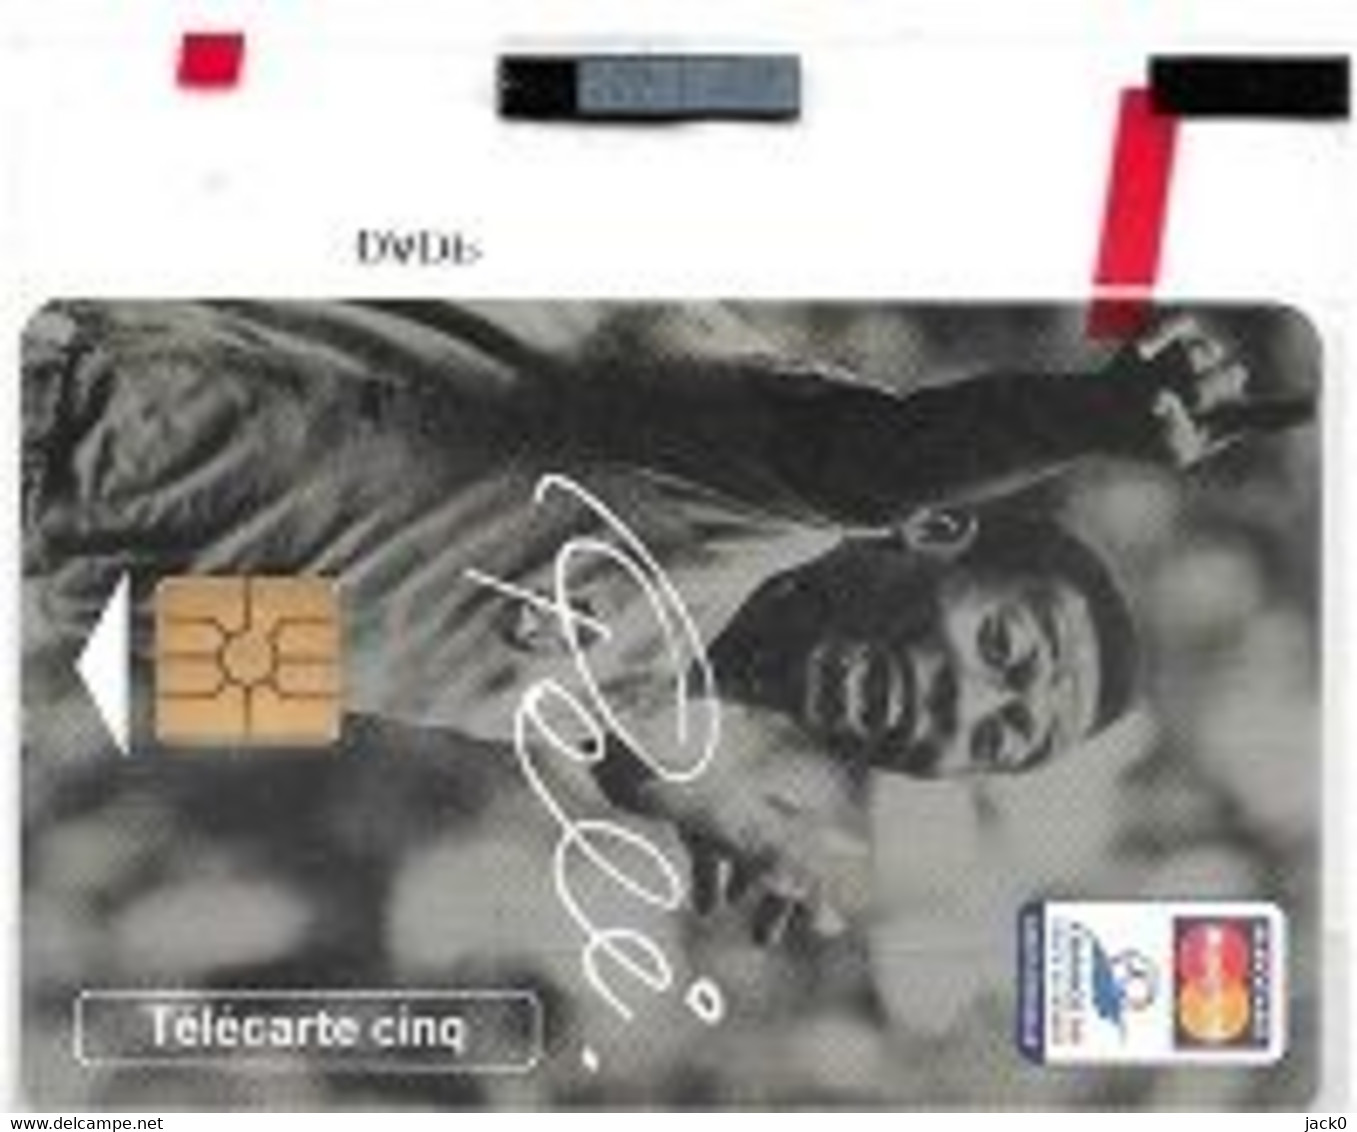 Télécarte  N S B  5 U,Sport  Foot-ball  Joueur  PELE - MASTERCARD, GN 447, 14 500 Ex, 06 / 98 - Privat